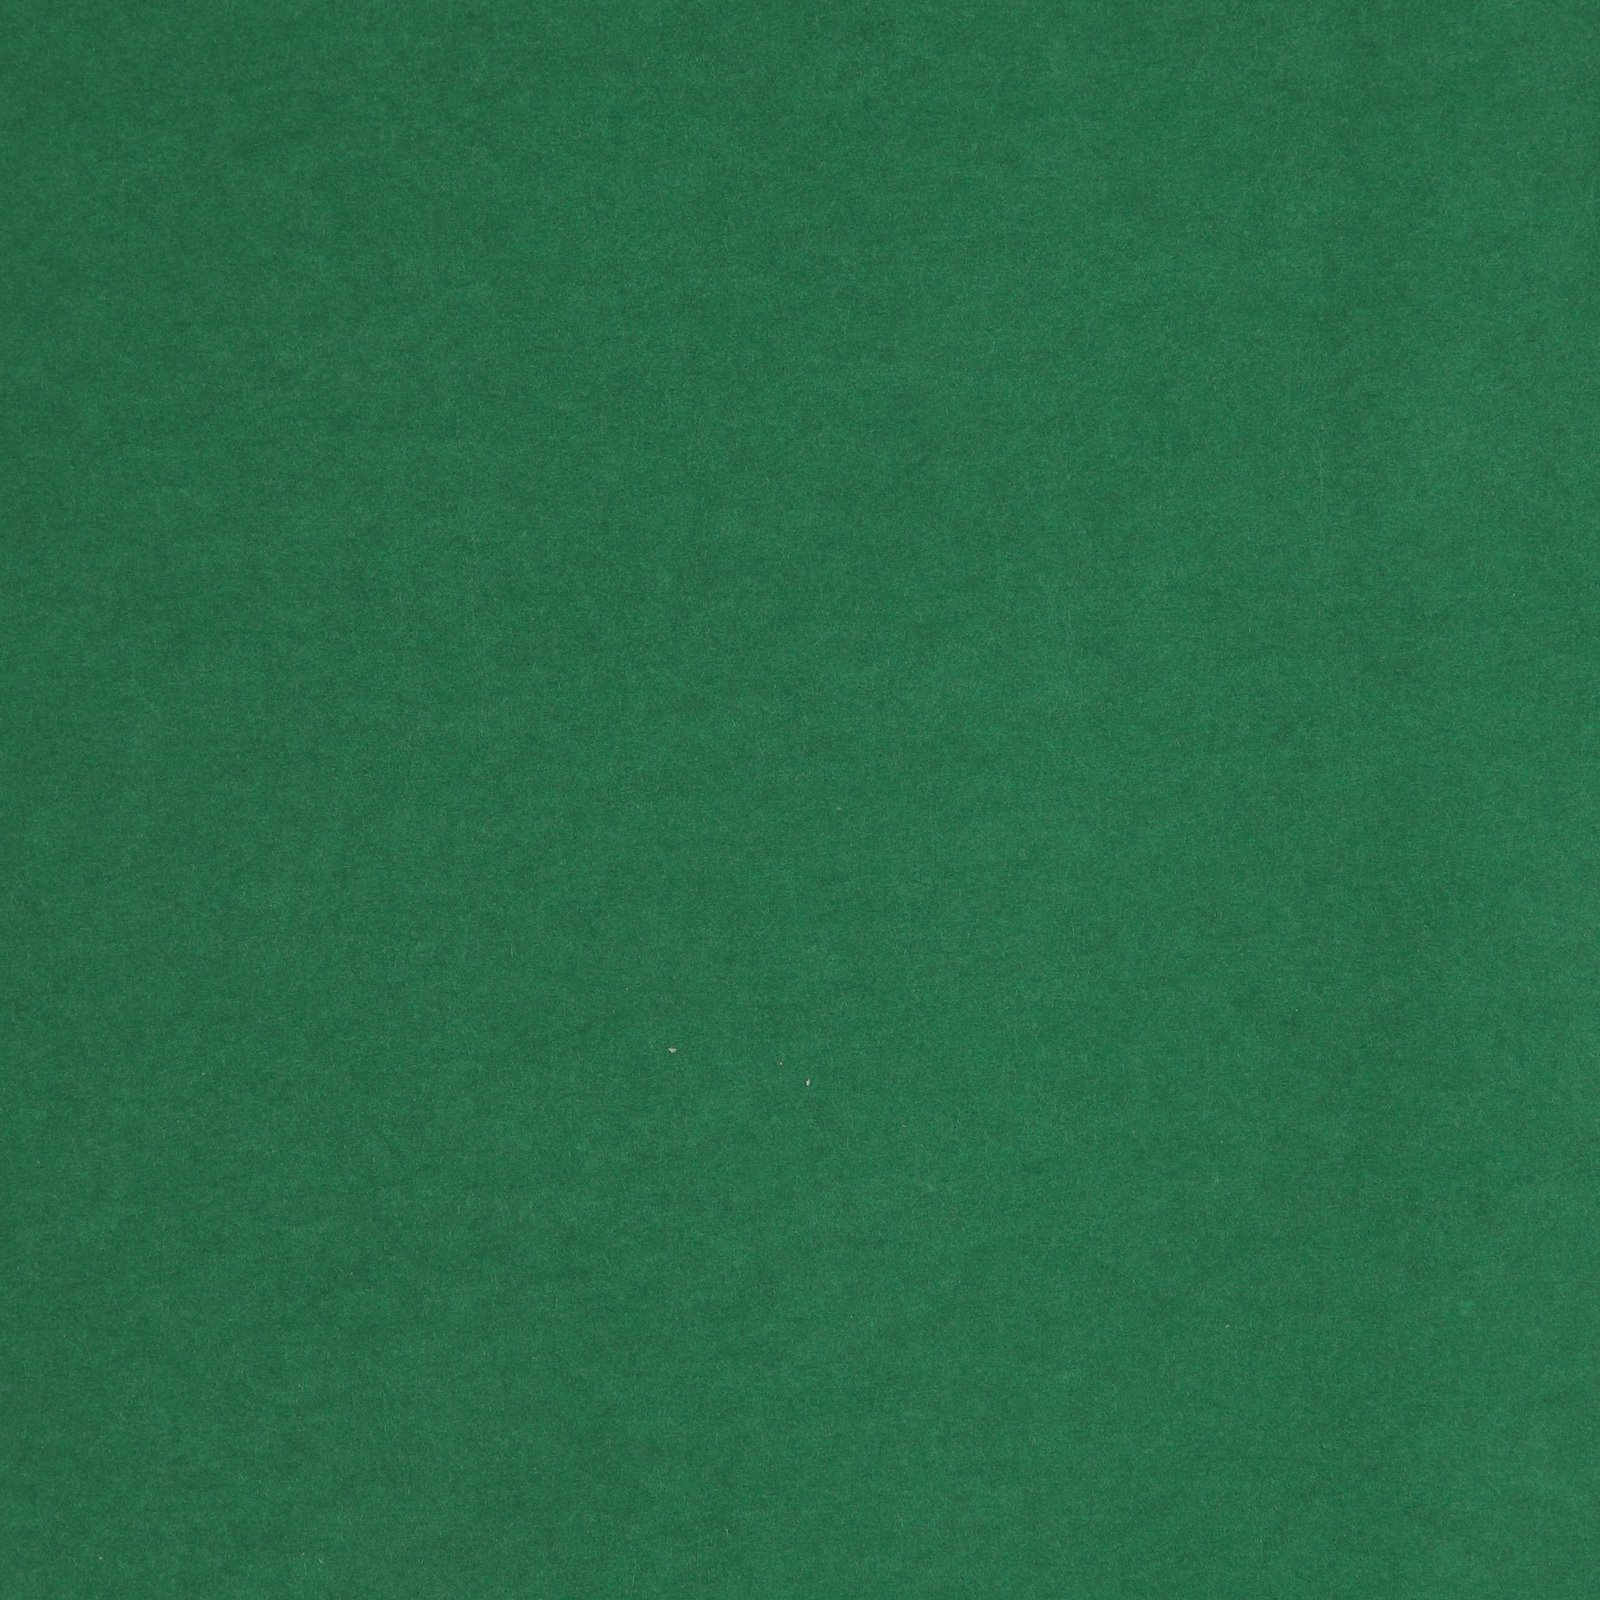 PAP FAB dark green 75x100cm 95508_pack_solid